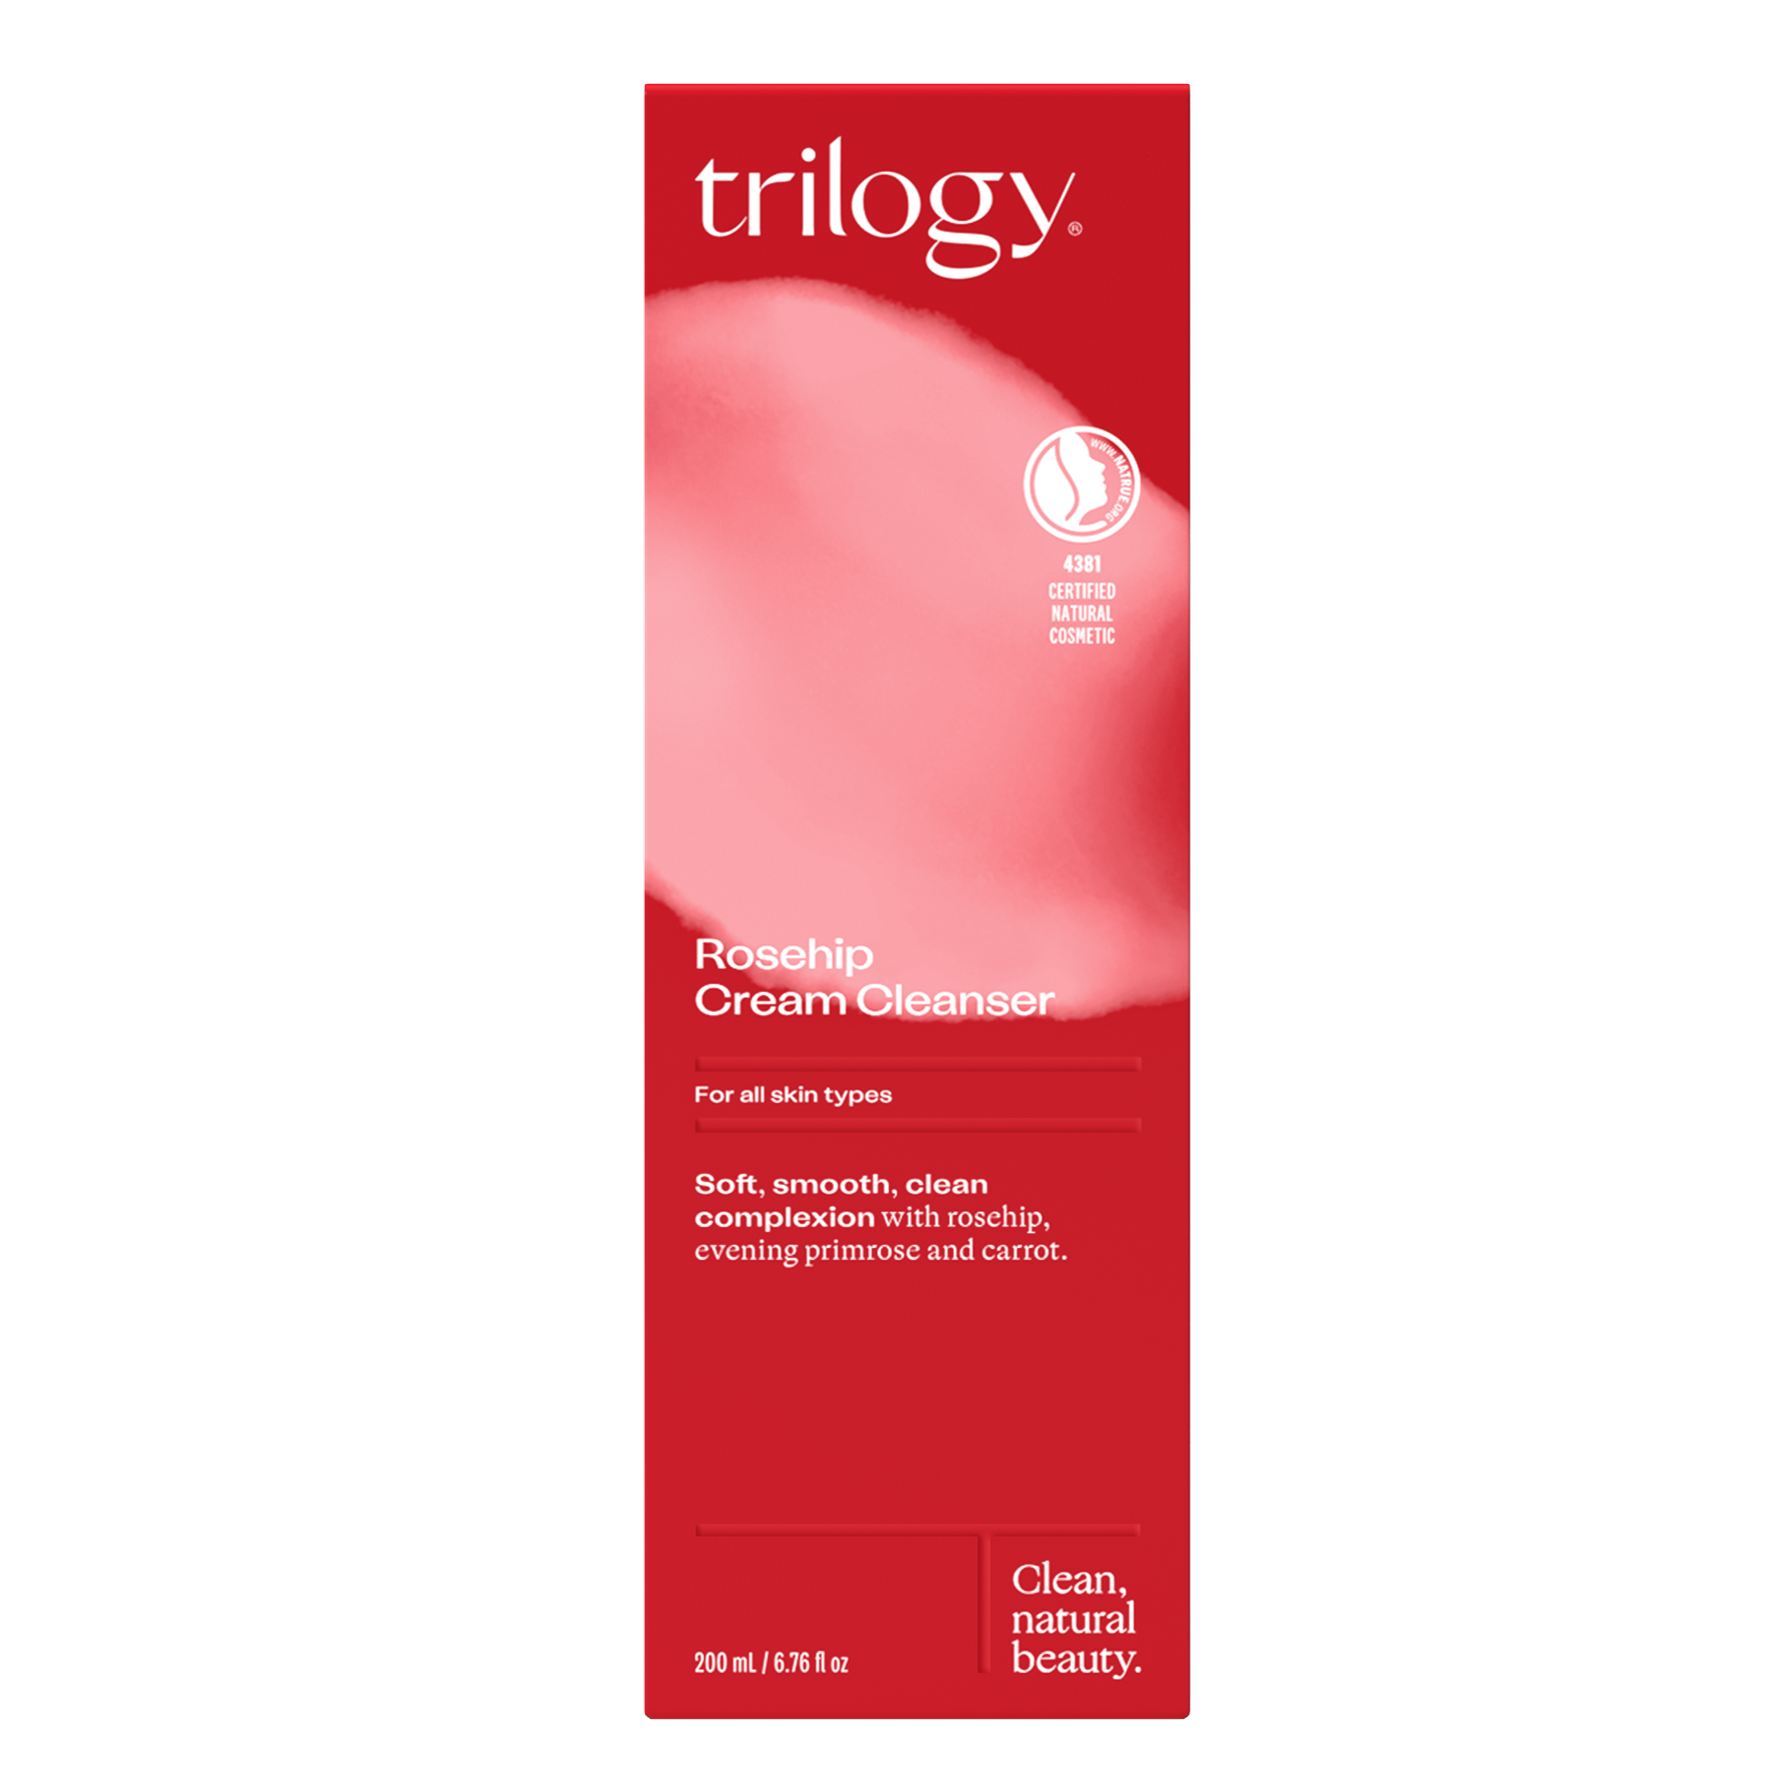 TRILOGY Rosehip Cream Cleanser (200ml)